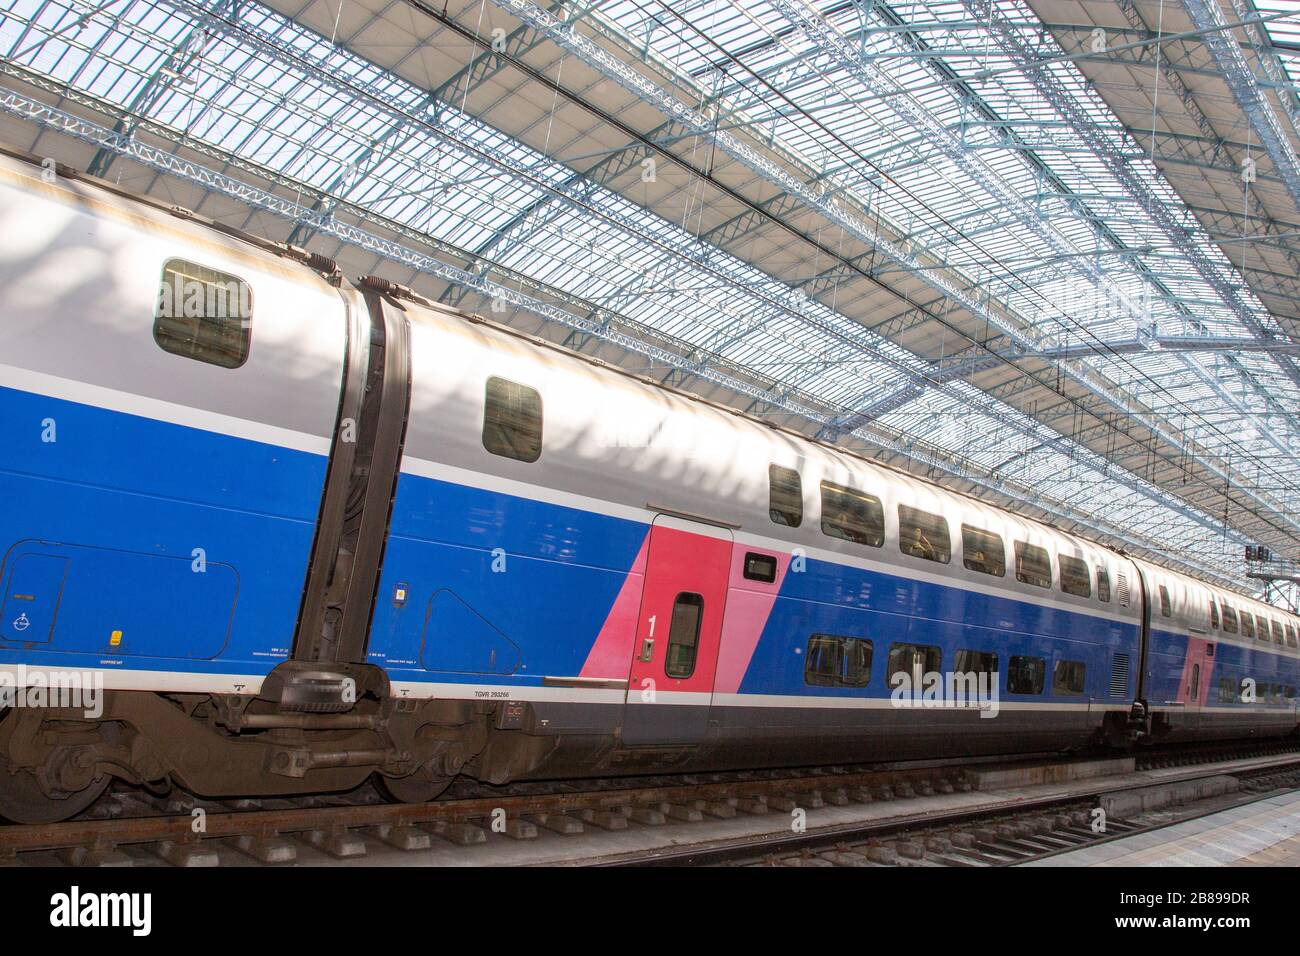 Bordeaux , Aquitaine / France - 03 03 2020 : TGV high speed train in  platform of main railway Gare SNCF in Bordeaux Saint Jean station Stock  Photo - Alamy